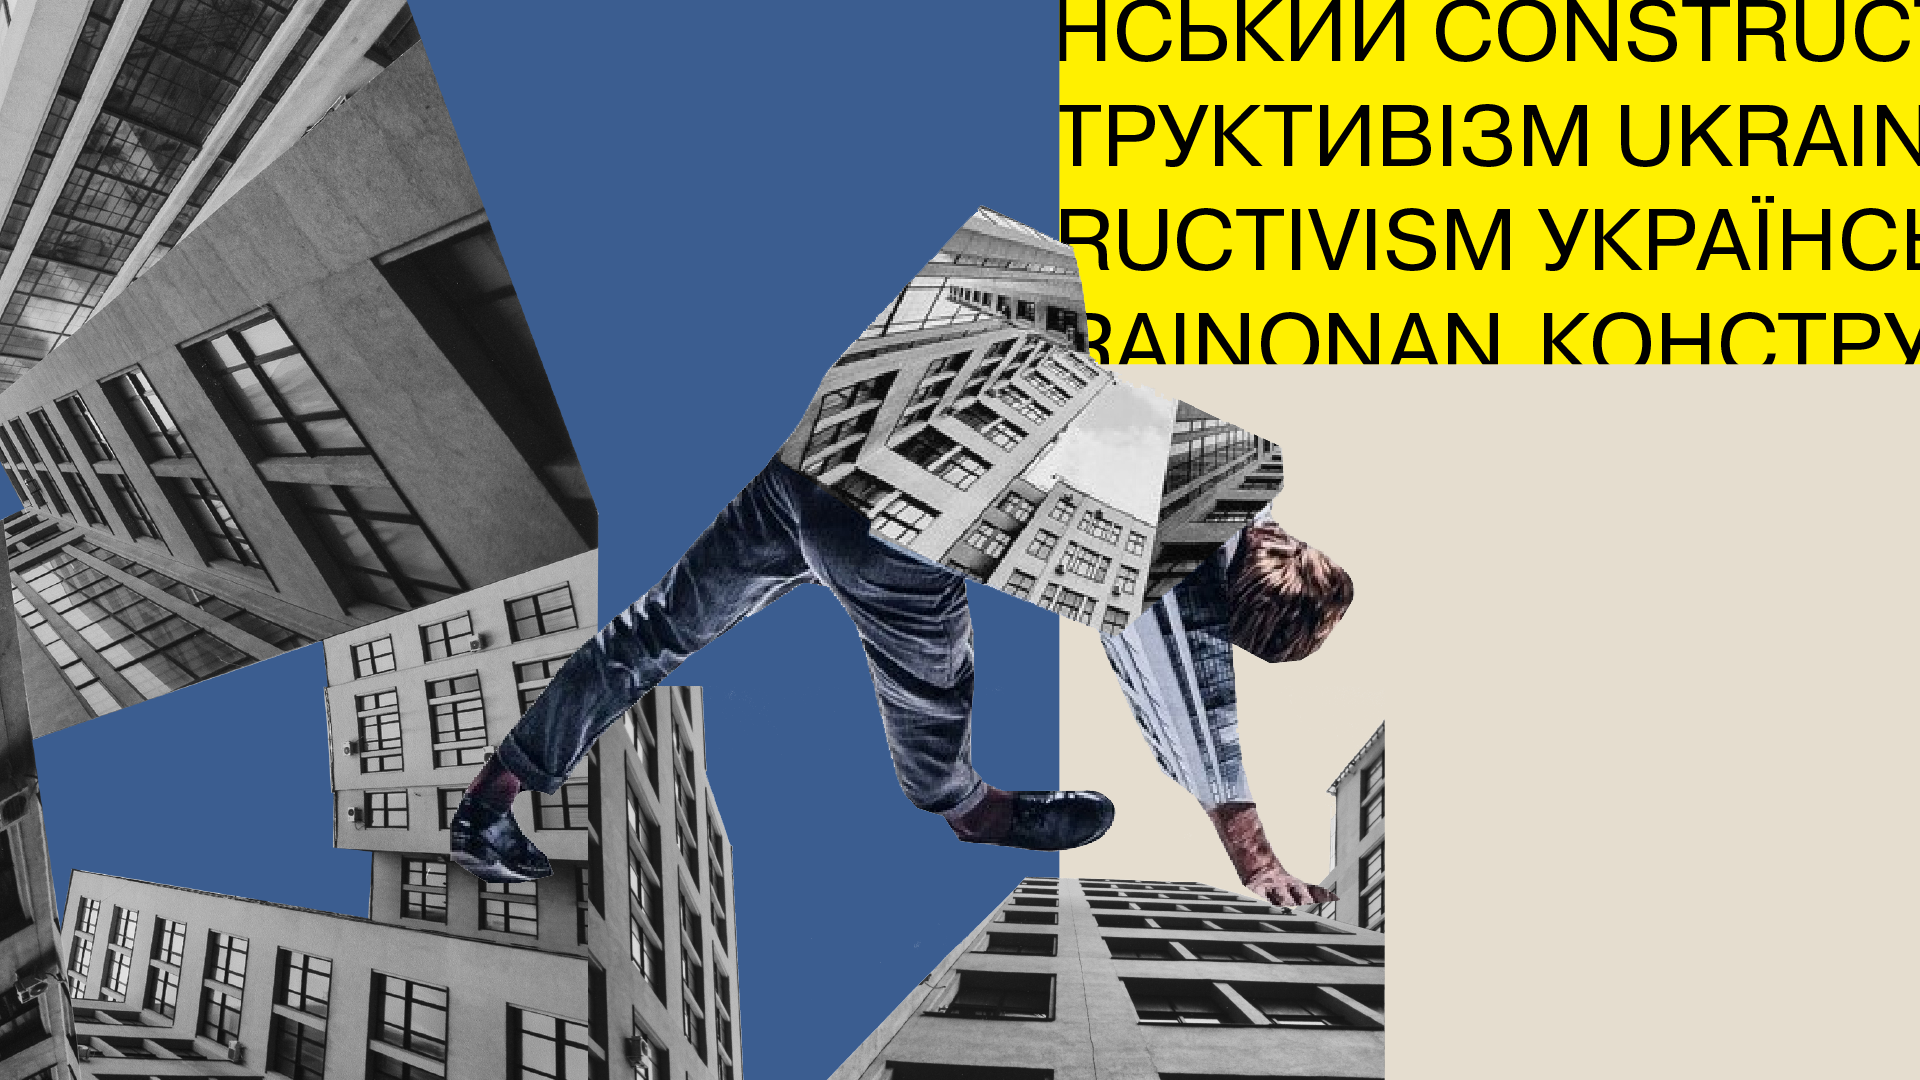 🏢 Pro ukraїnśkyj konstruktyvizm zrobljať muľtymedijnyj onlajn projekt — prem'jera ćogo tyžnja 